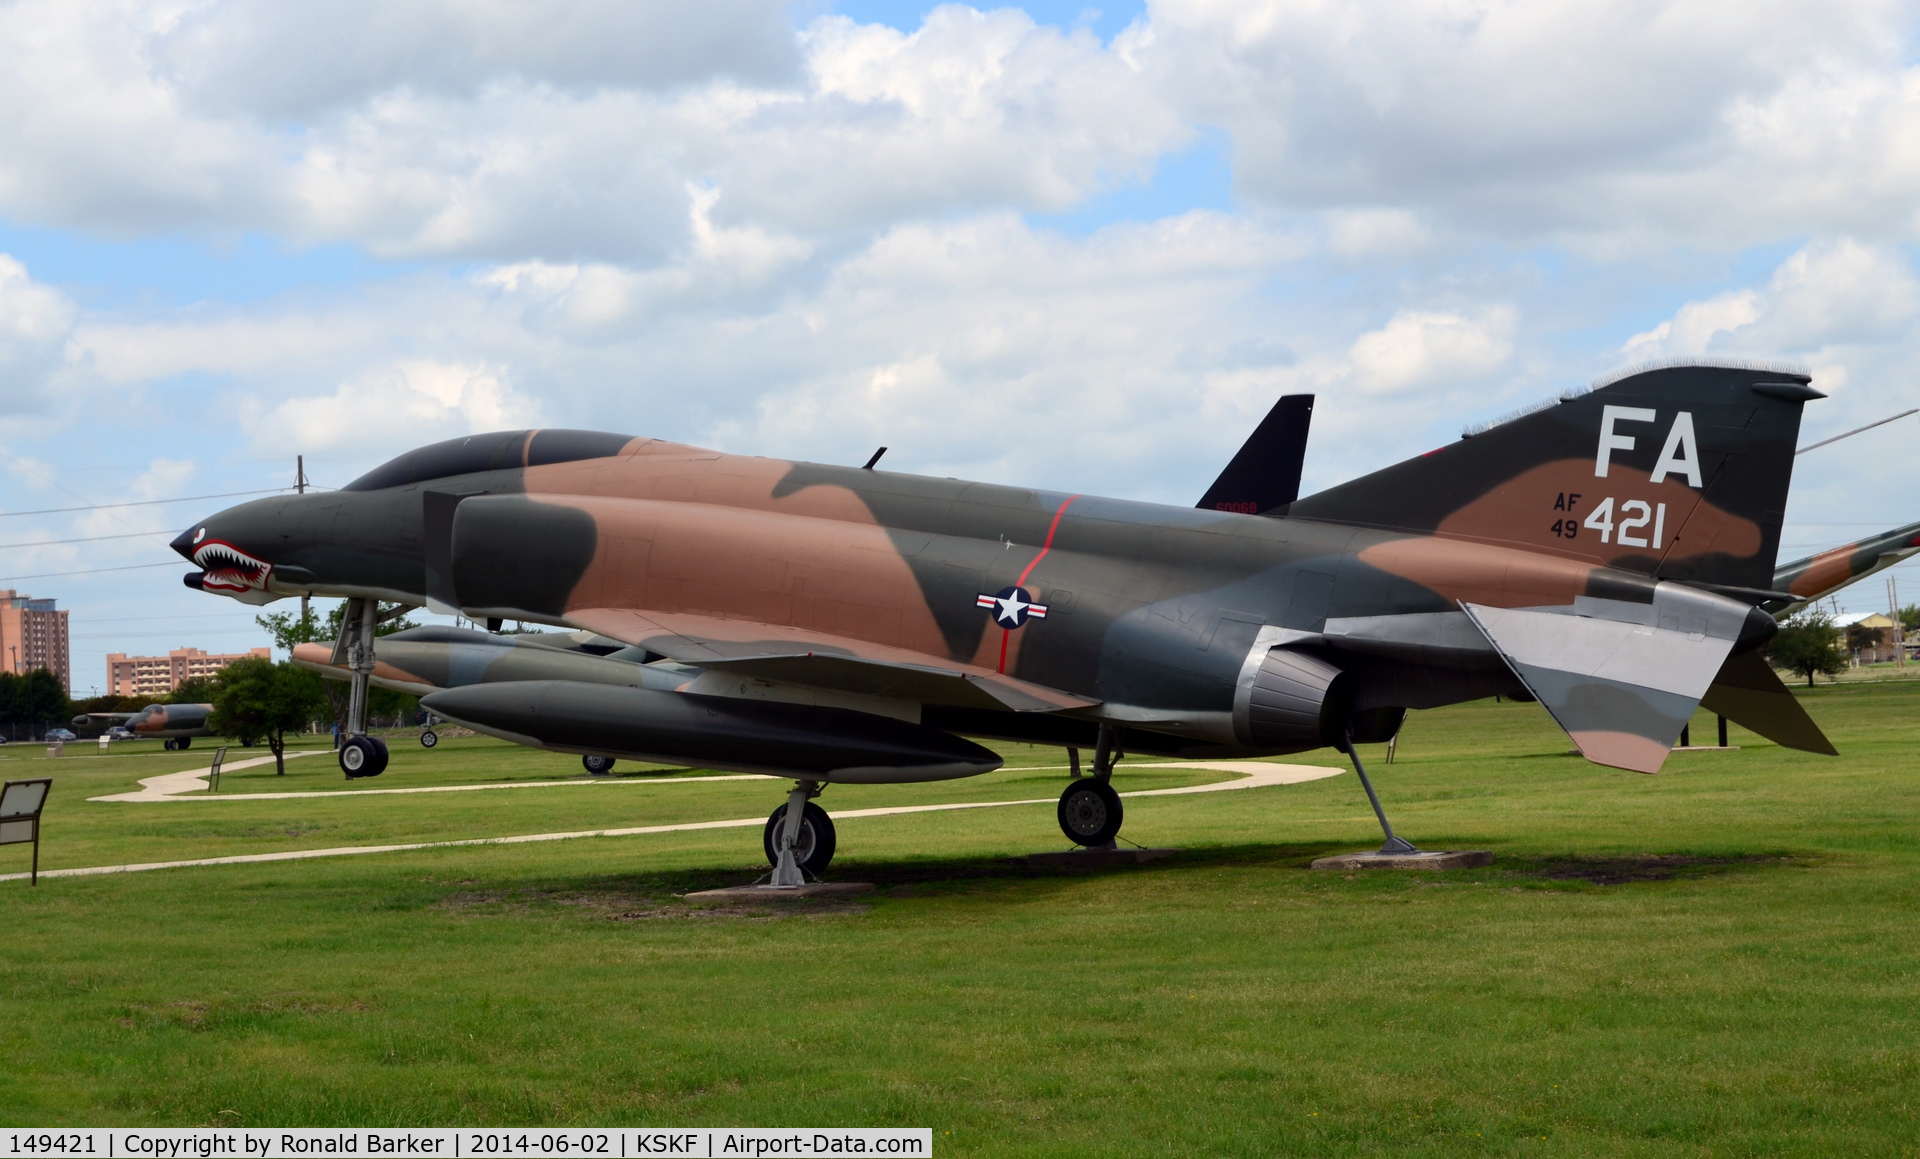 149421, McDonnell F-4B Phantom II C/N 138, Shown as 64-9421 LMTC